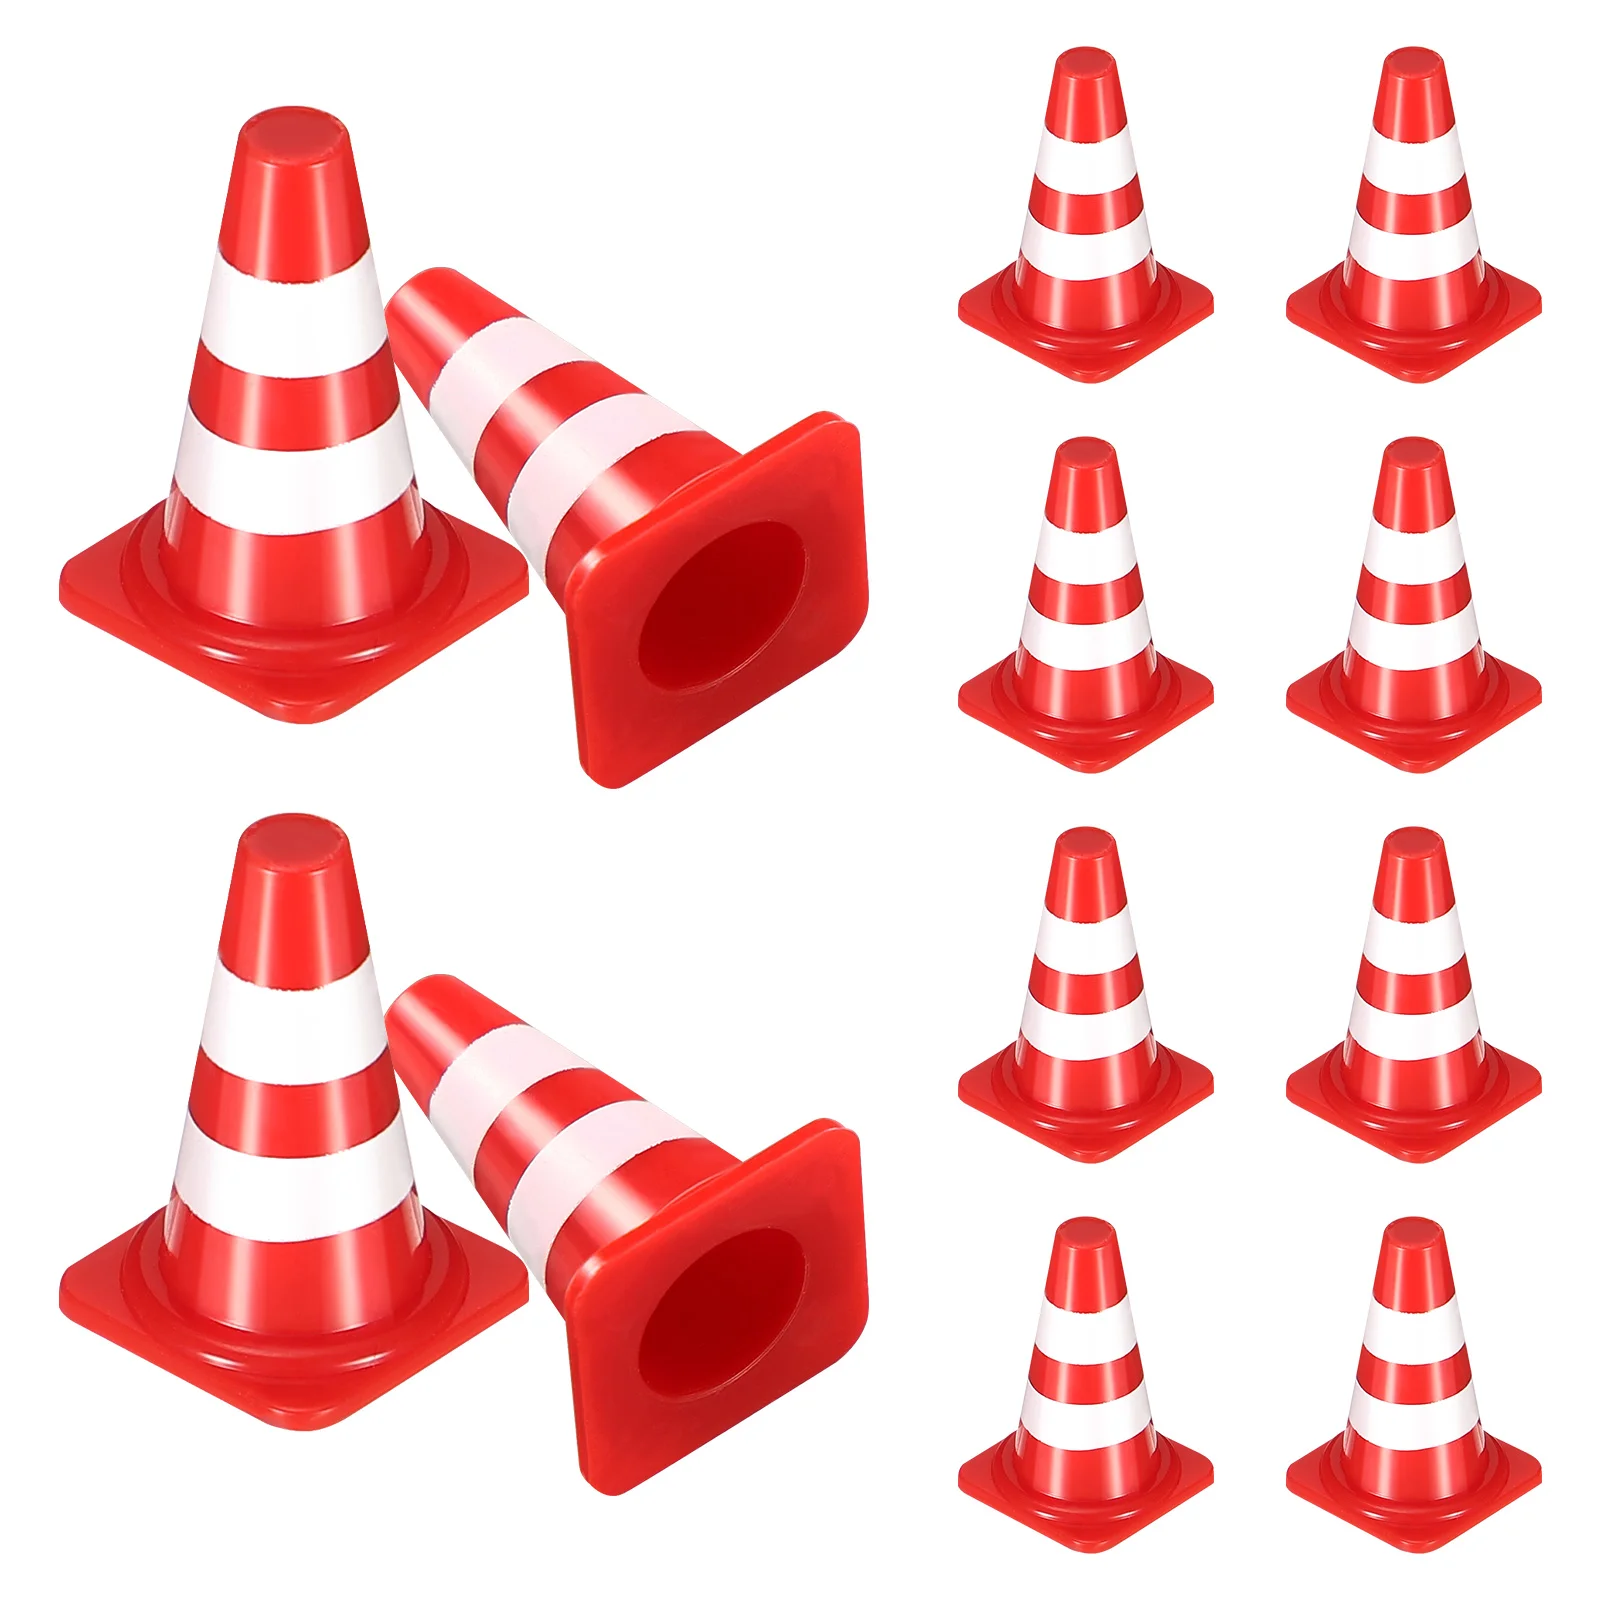 

Cones Mini Traffic Road Toys Cone Construction Toy Safety Parking Signs Roadblocks Roadblock Miniaturetrainingsign Tiny Red